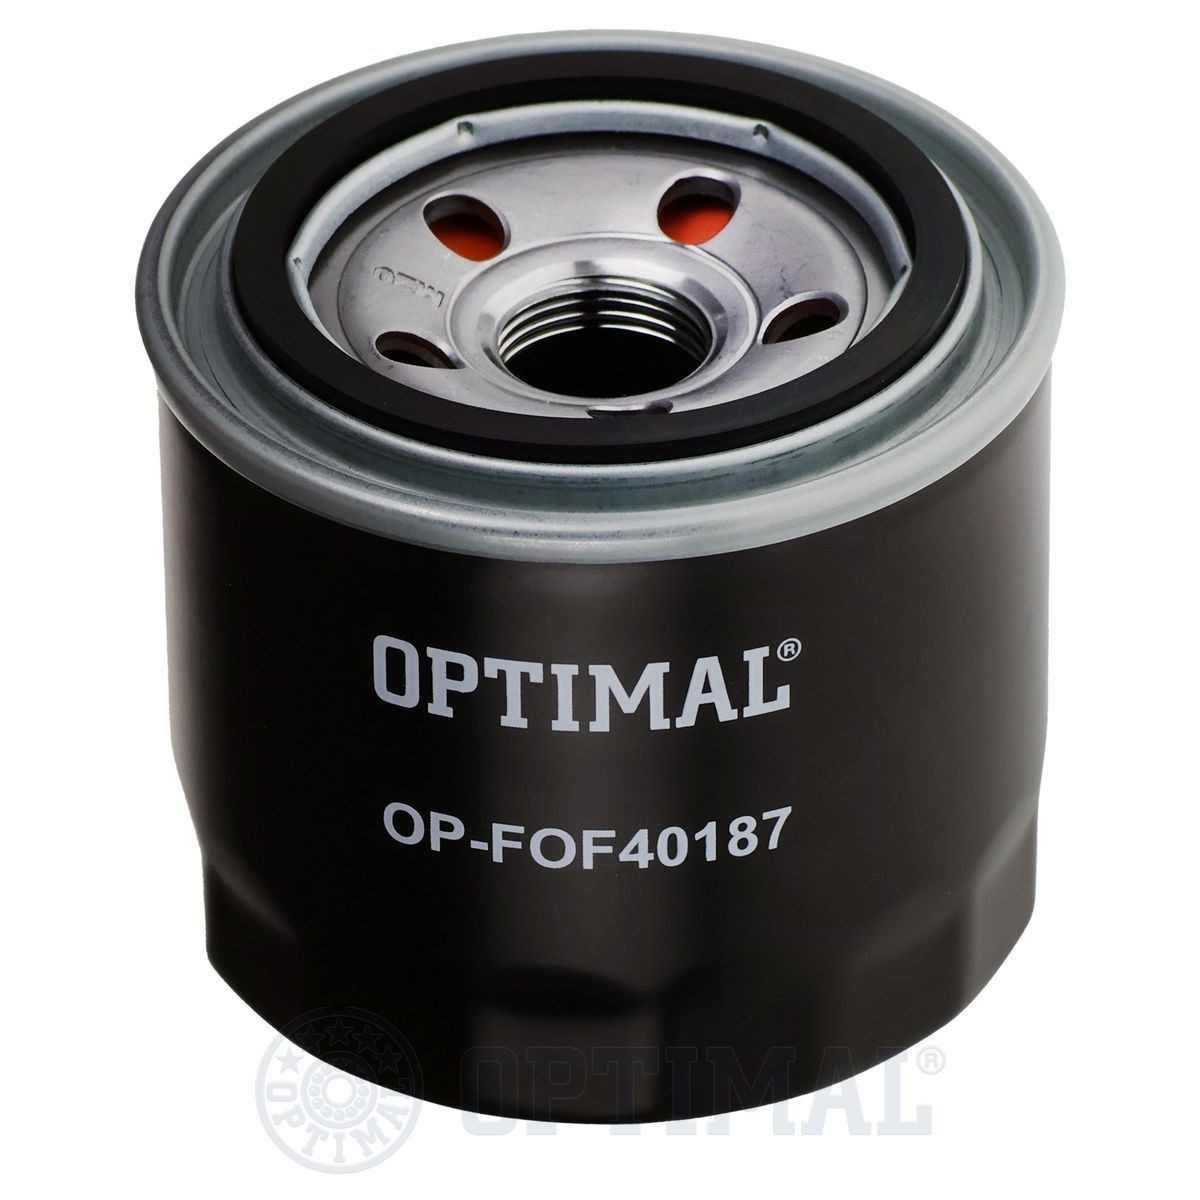 OPTIMAL OP-FOF40187 Oil filter 14528387